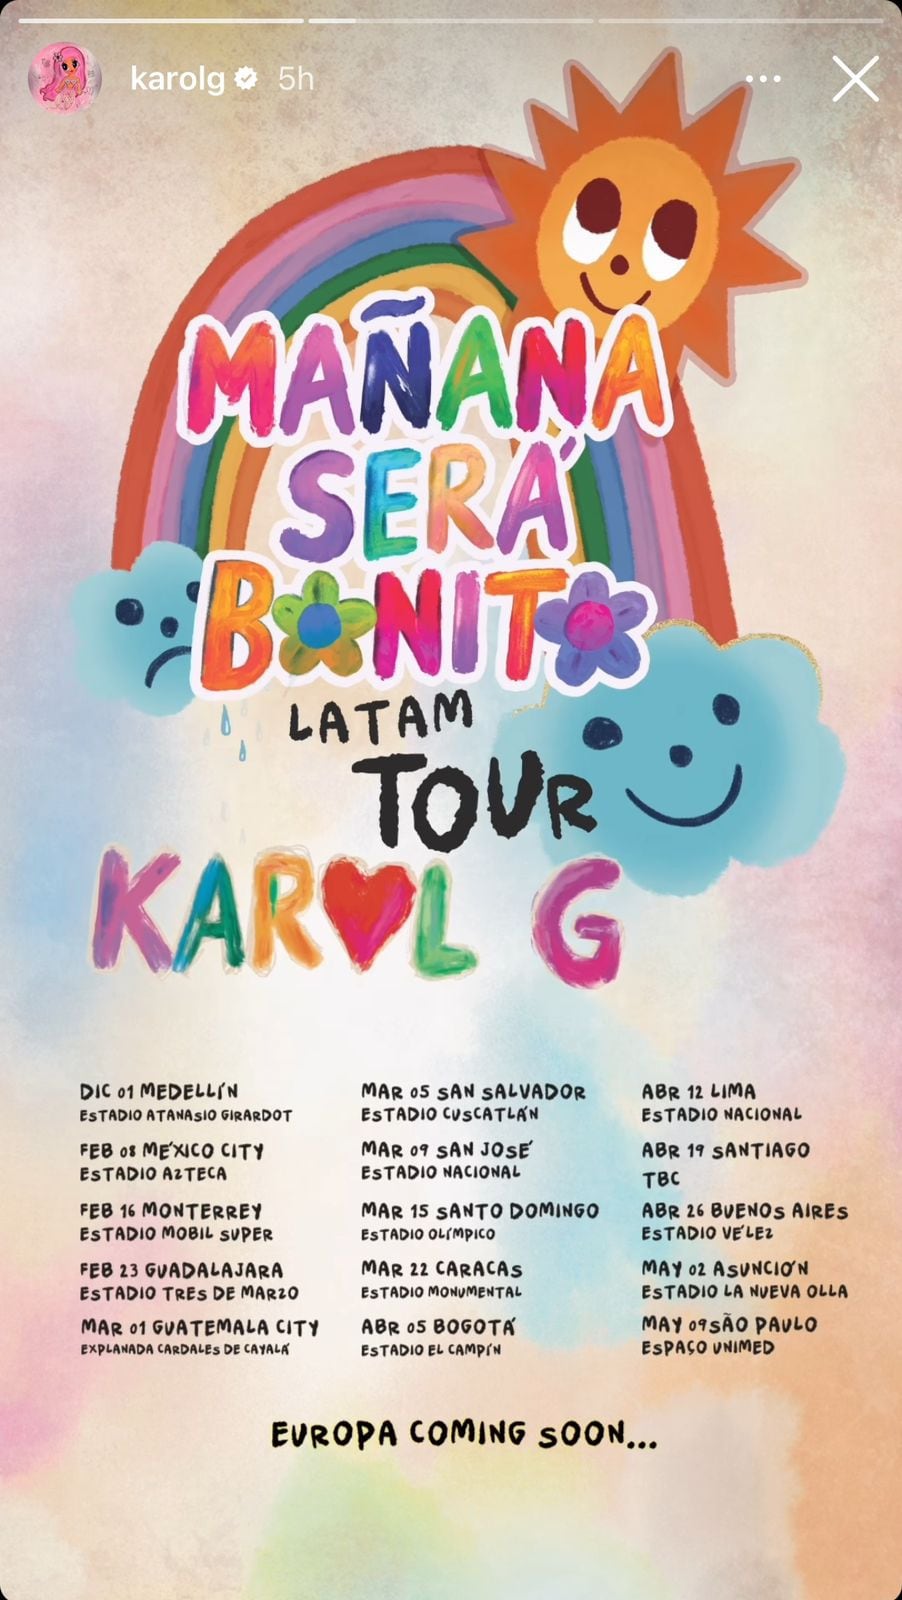 Fechas de Karol G en su tour por Latinoamérica. (Foto: Instagram / @karolg)